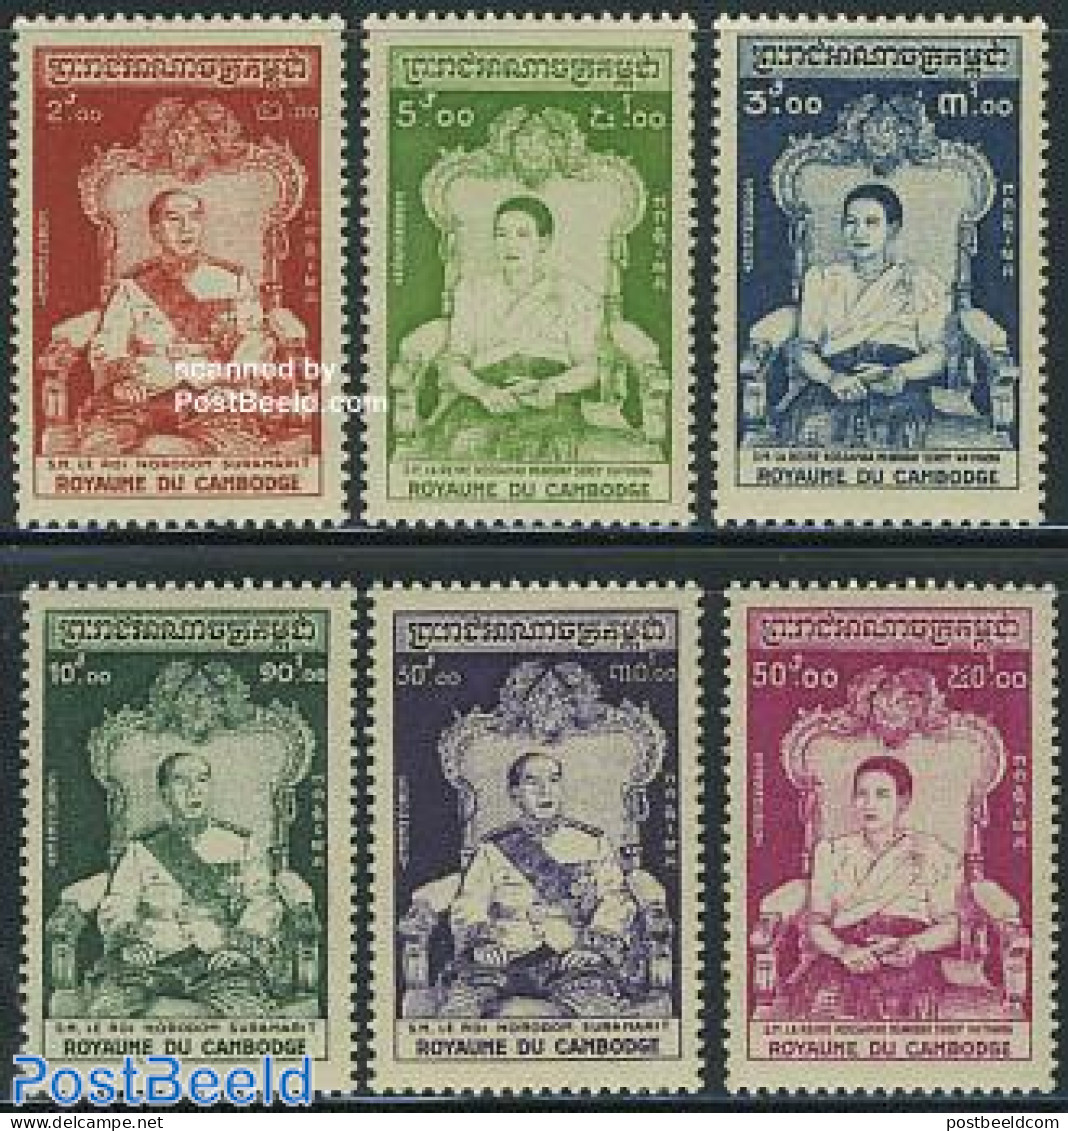 Cambodia 1956 Coronation 6v, Mint NH, History - Kings & Queens (Royalty) - Familles Royales